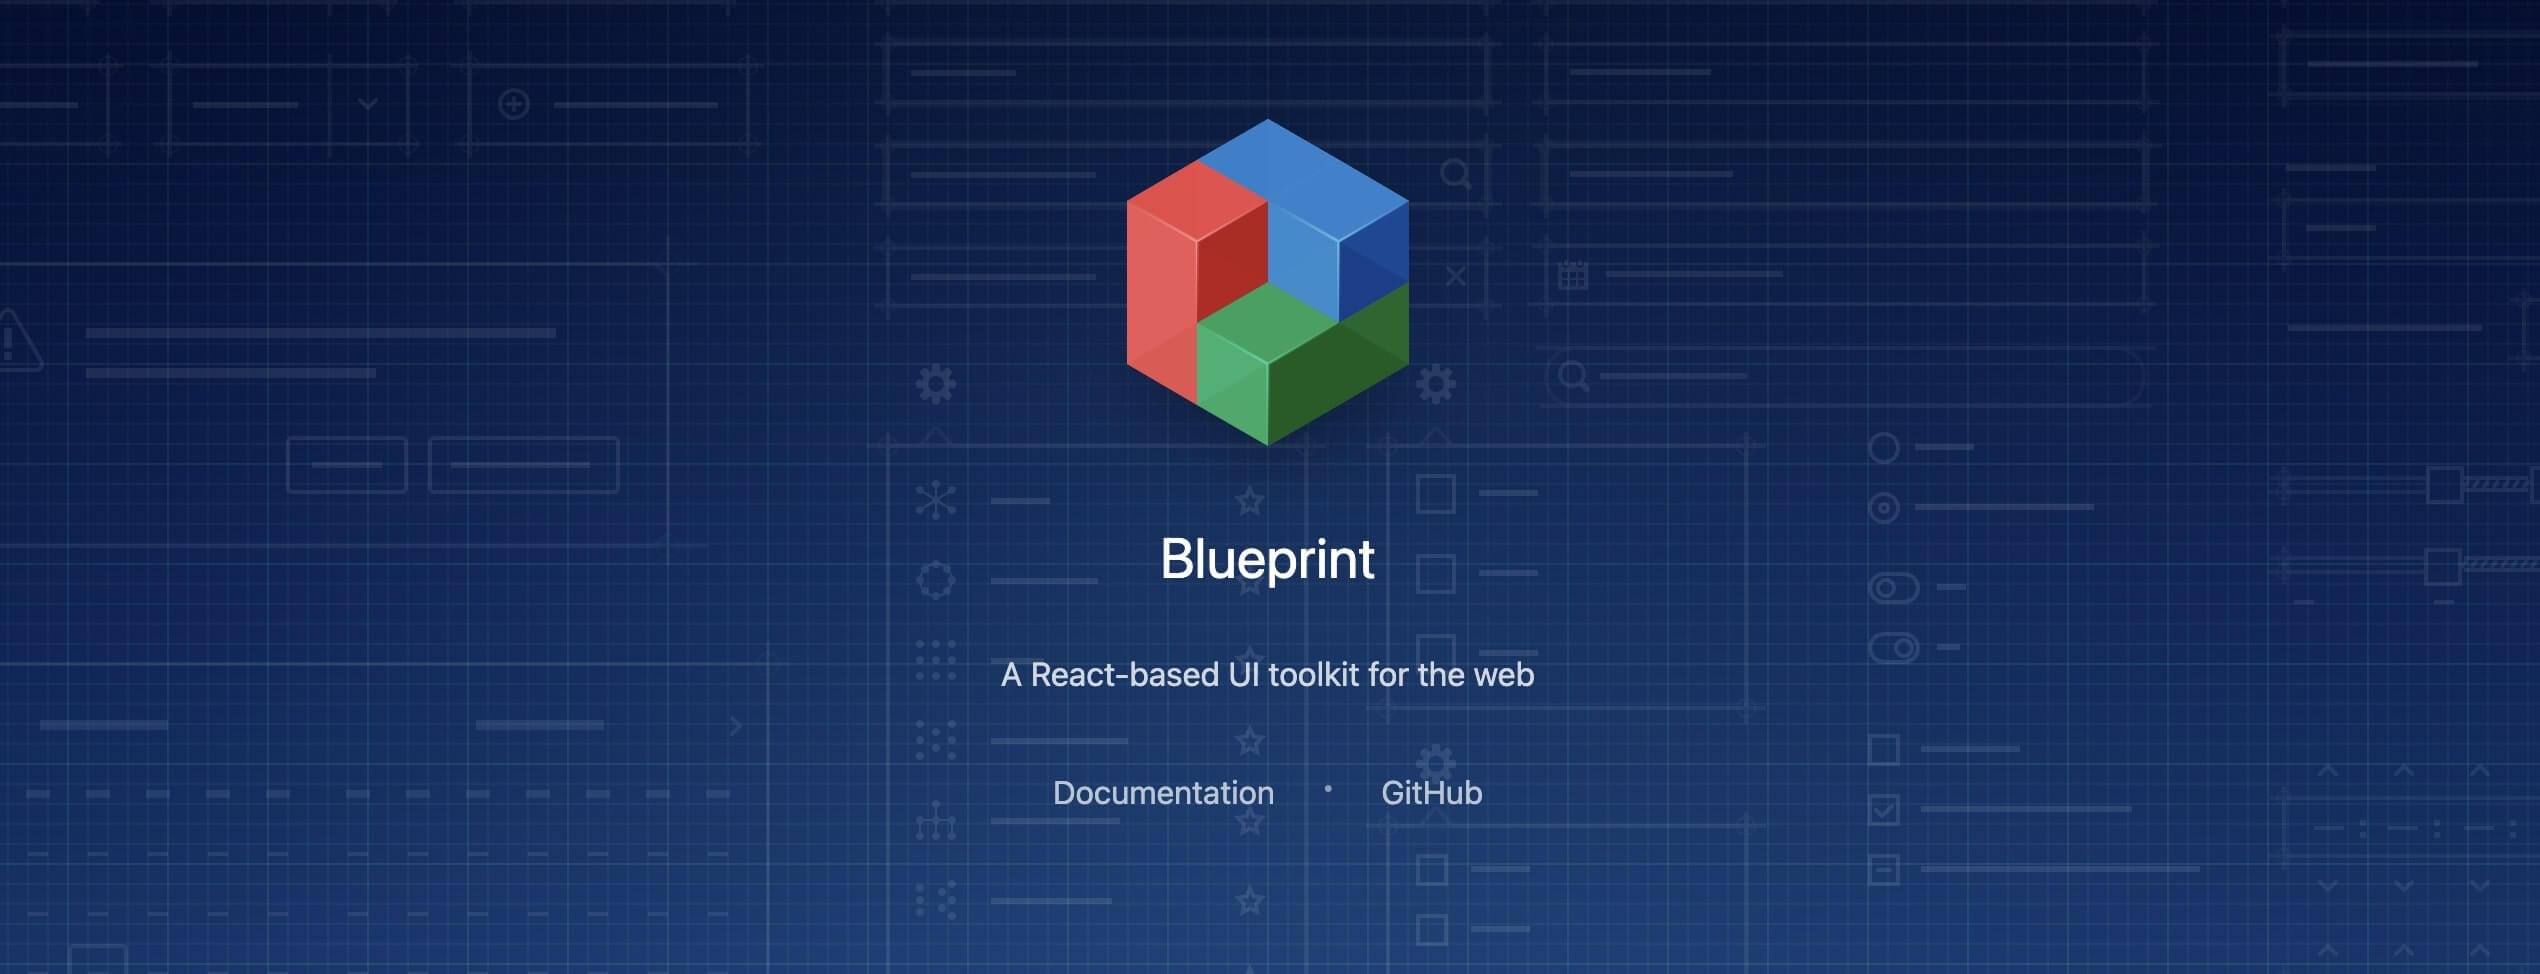 Blueprint React-based UI toolkit